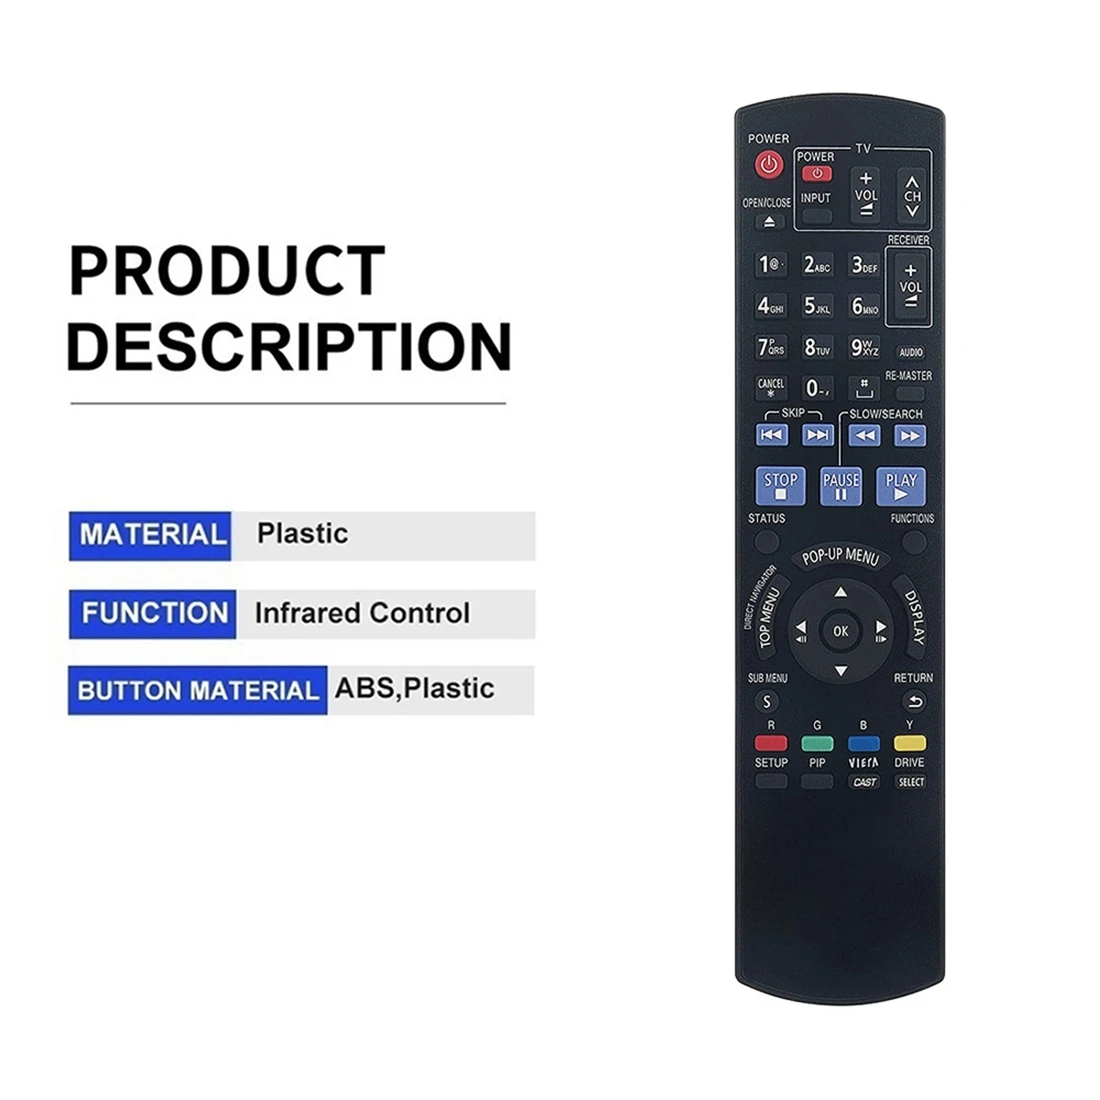 Controle remoto N2QAYB000378 para Panasonic Leitor Blu-Ray DMP-BD60 DMP-BD80 DMP-BD35 DMP-BD605 DMP-BD601 DMP-BD80K